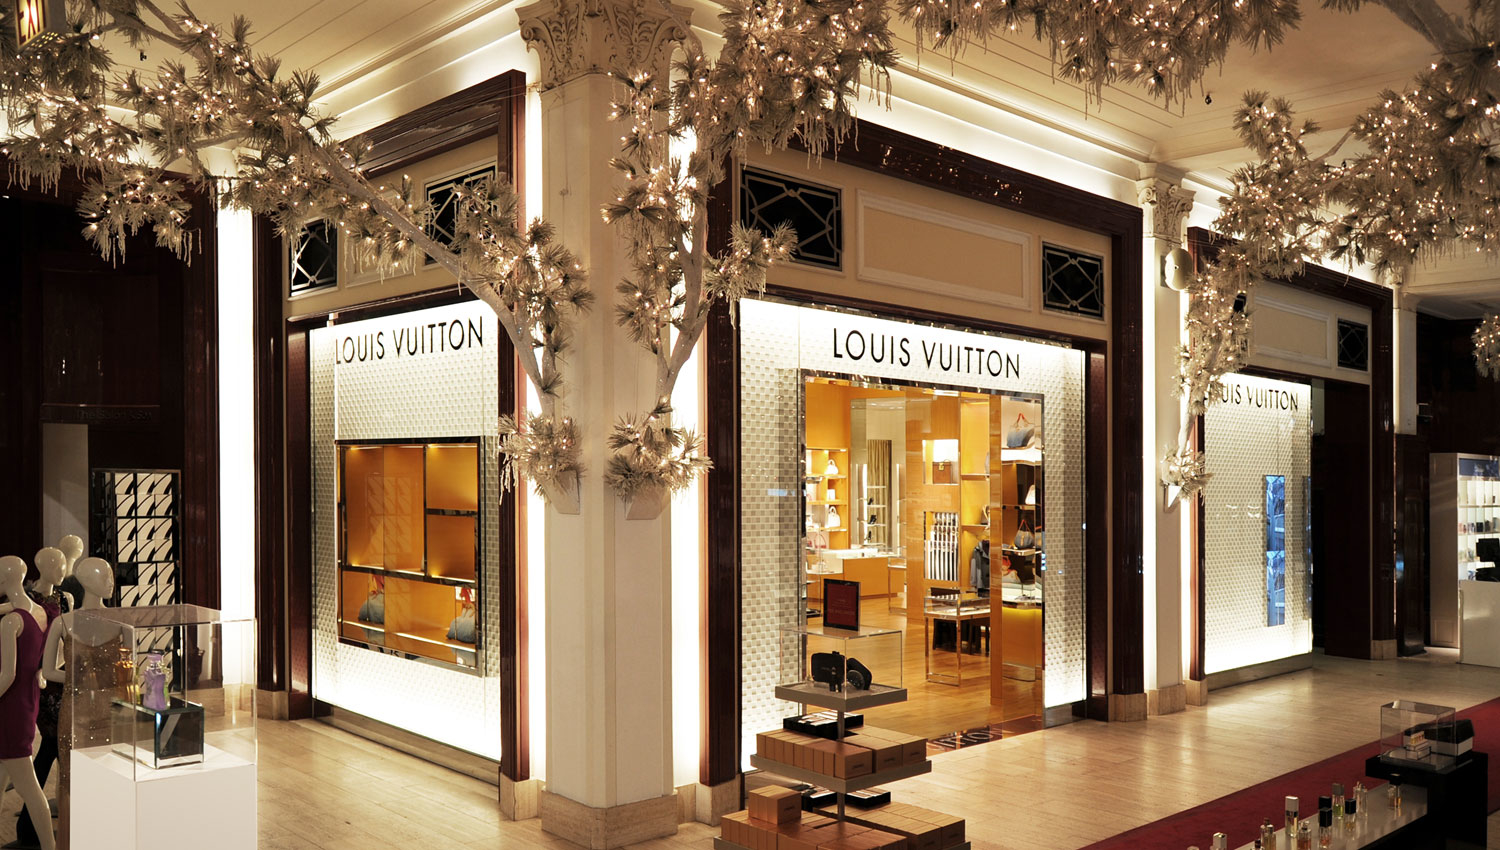 Louis Vuitton New York Saks Fifth Ave, New York New York (NY) - www.waldenwongart.com